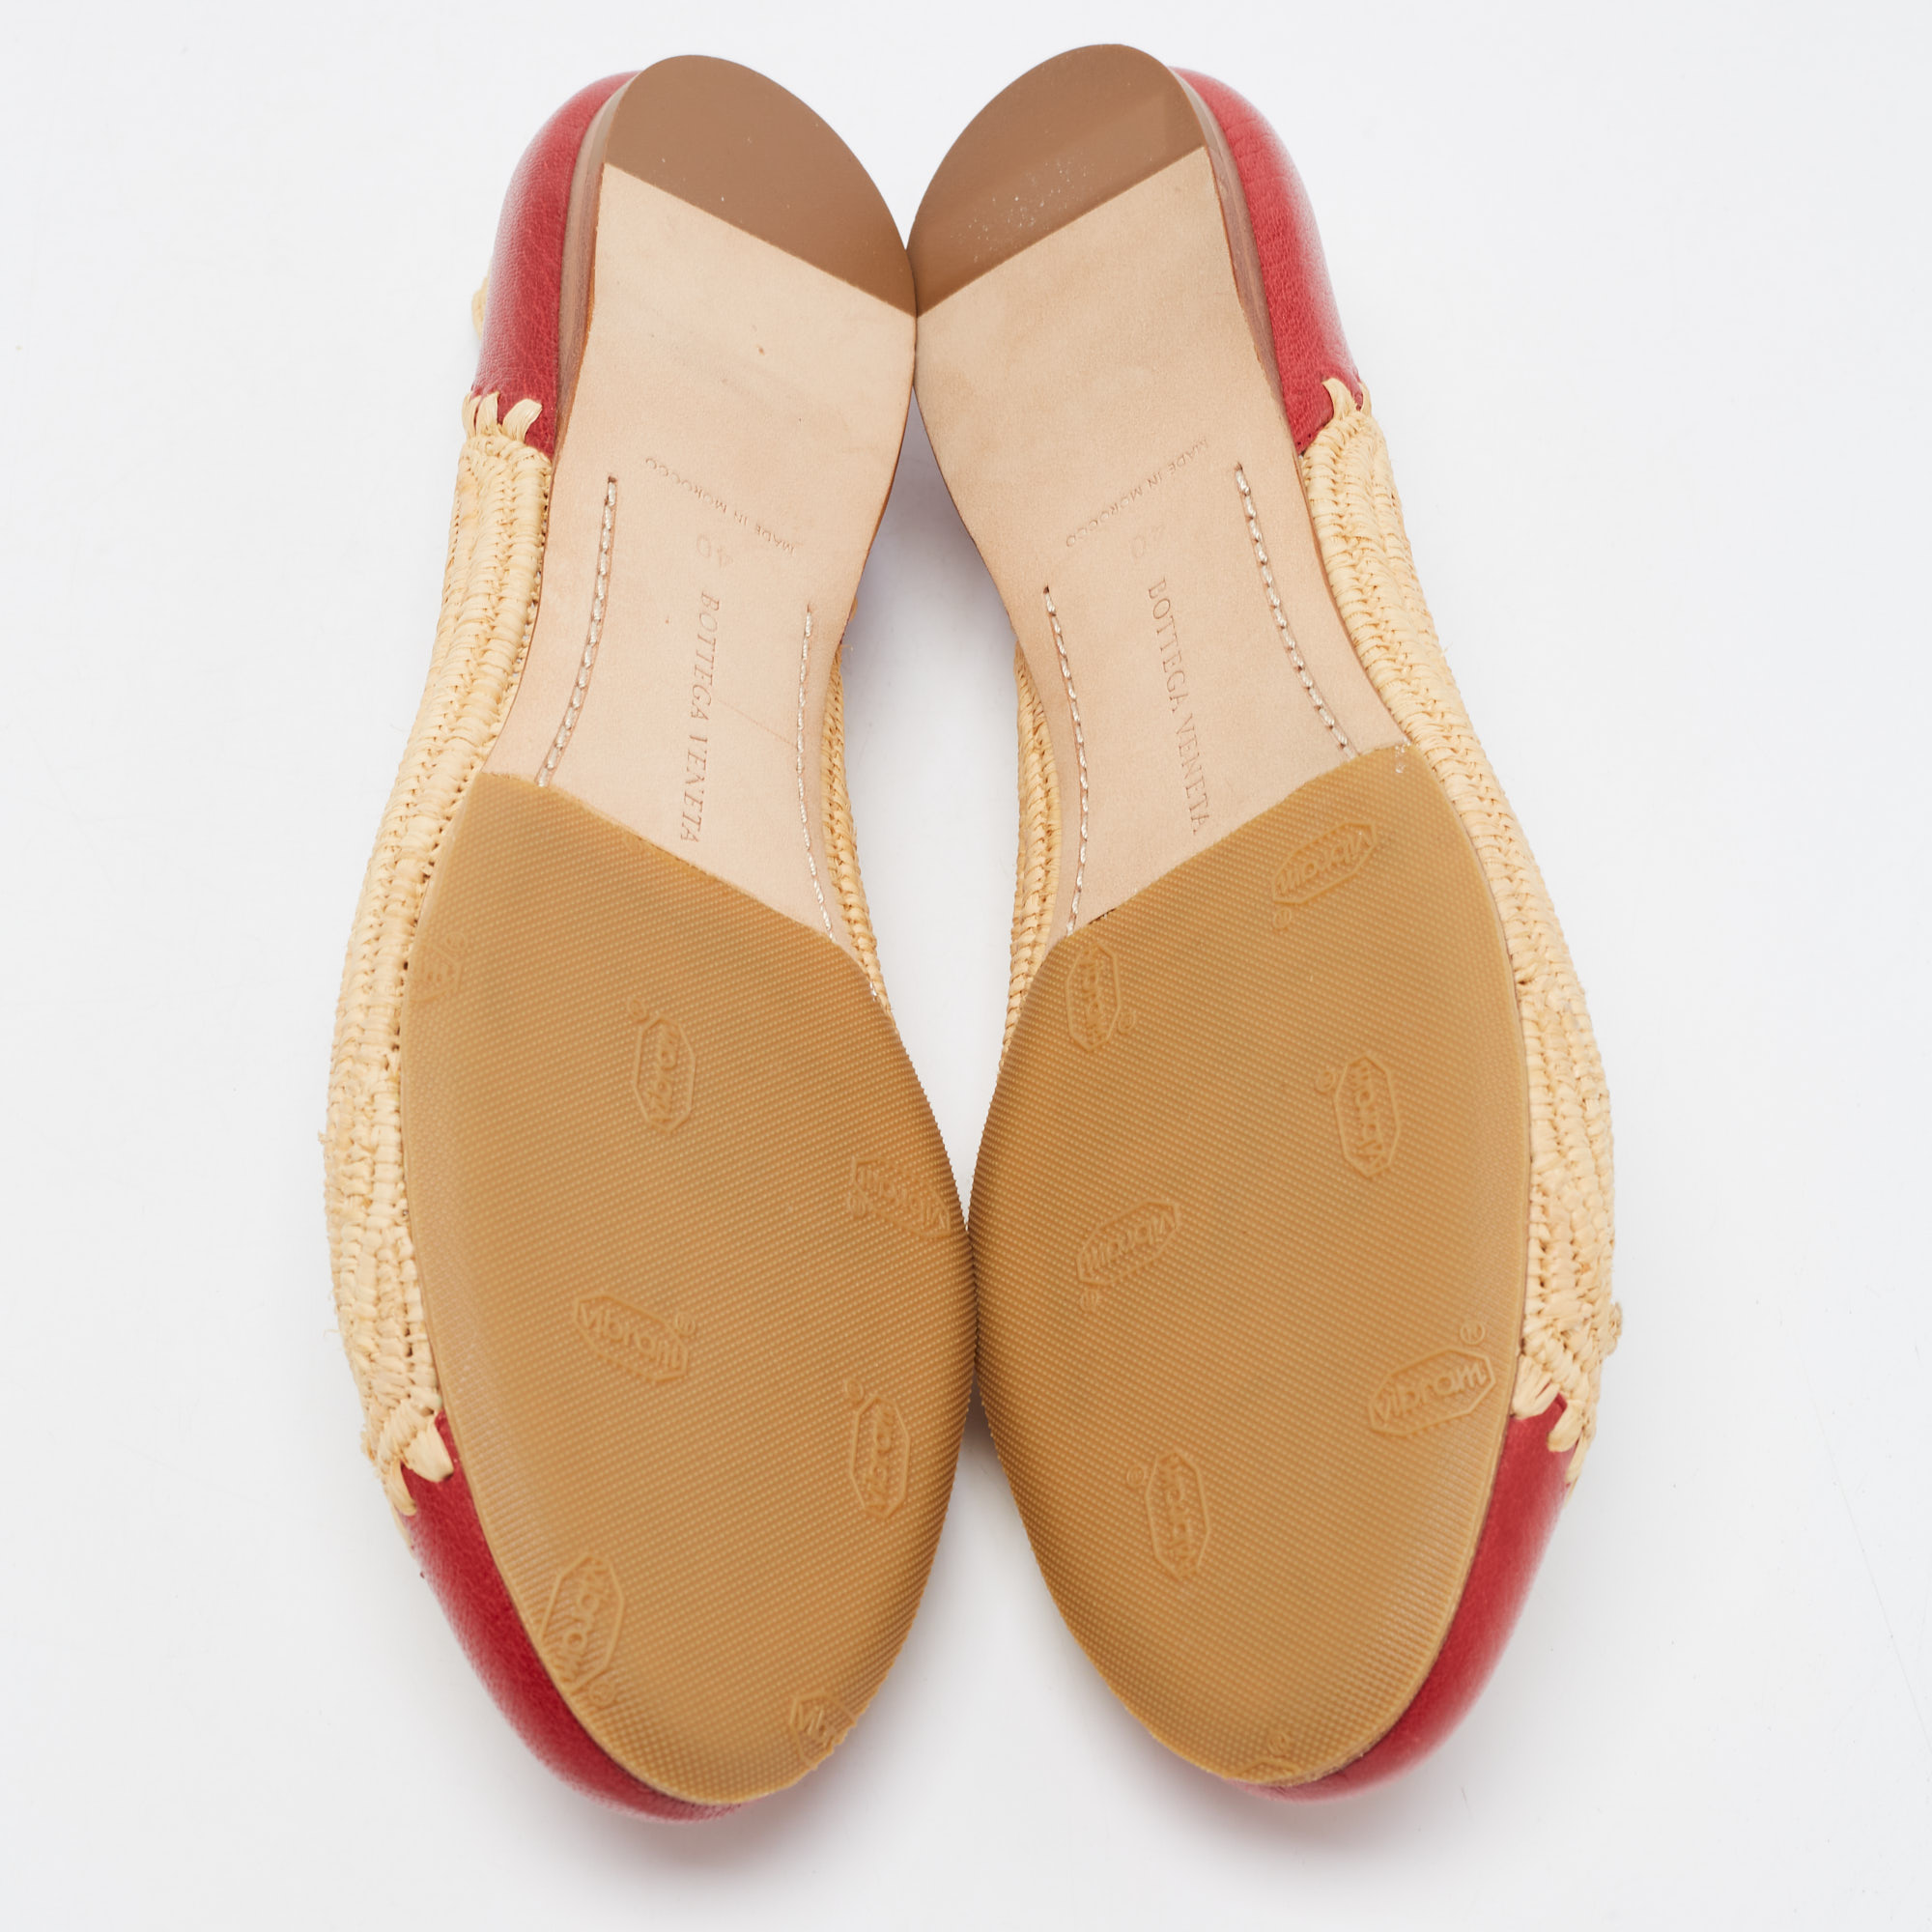 Bottega Veneta Red/Beige Leather And Raffia Bow Ballet Flats Size 40